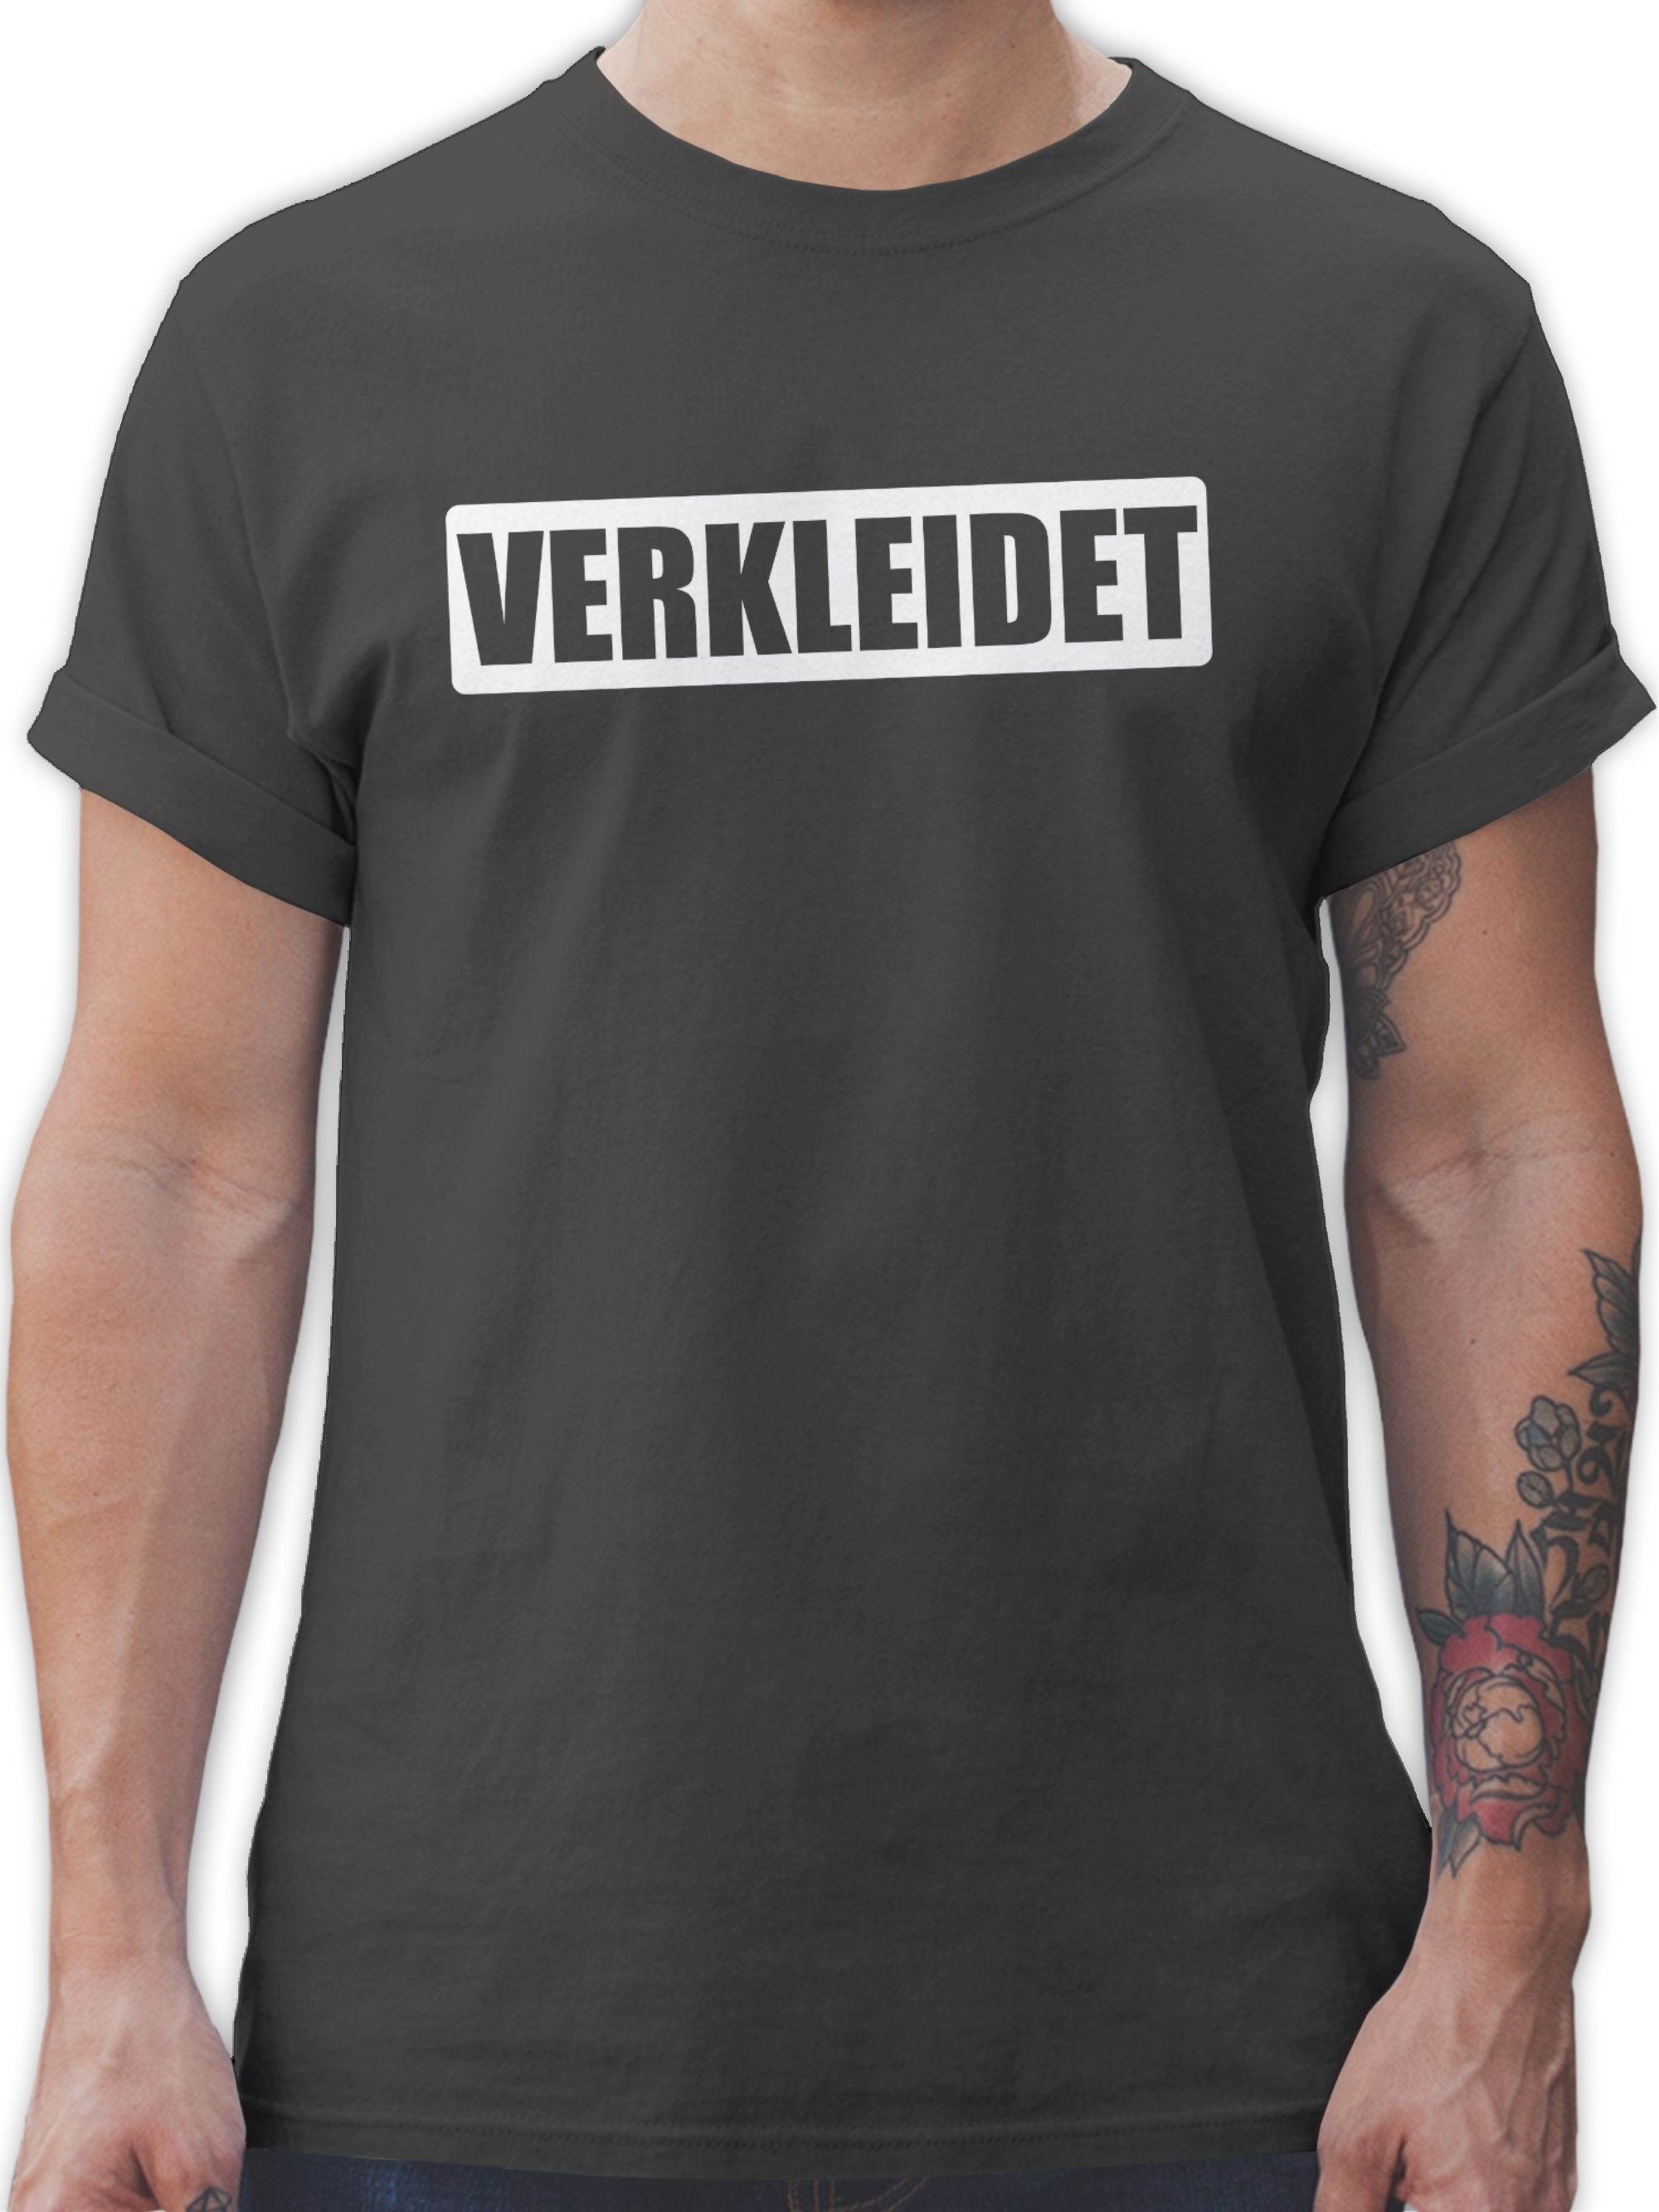 Shirtracer T-Shirt Verkleidet - Faschingskostüm Lustig Ironie Karneval Outfit 3 Dunkelgrau